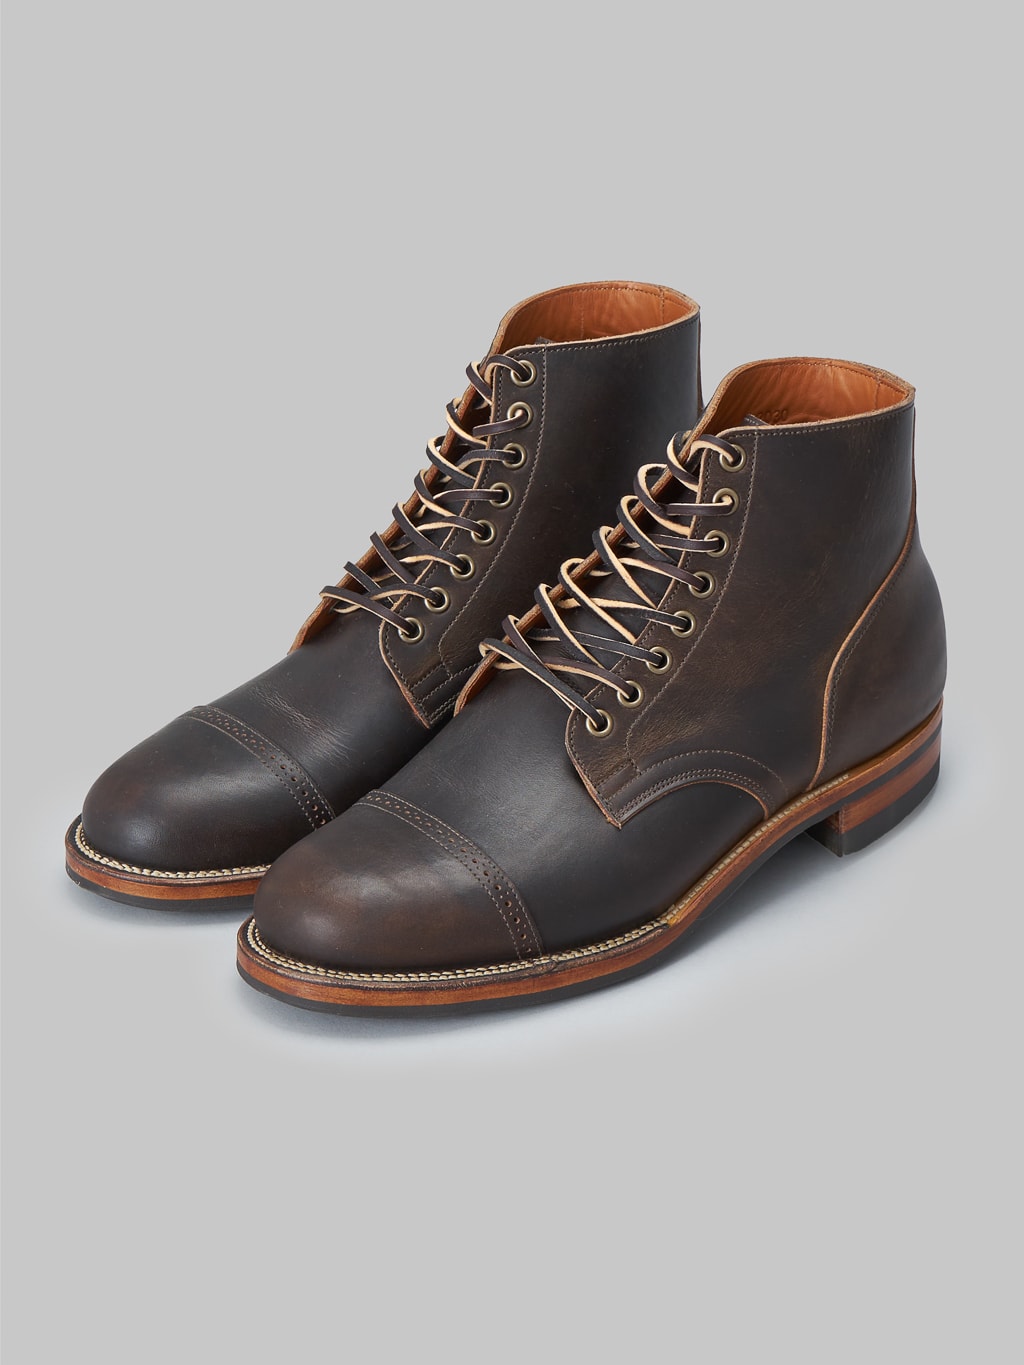 viberg service boot 2023 bct antique phoenix dark brown leather  style